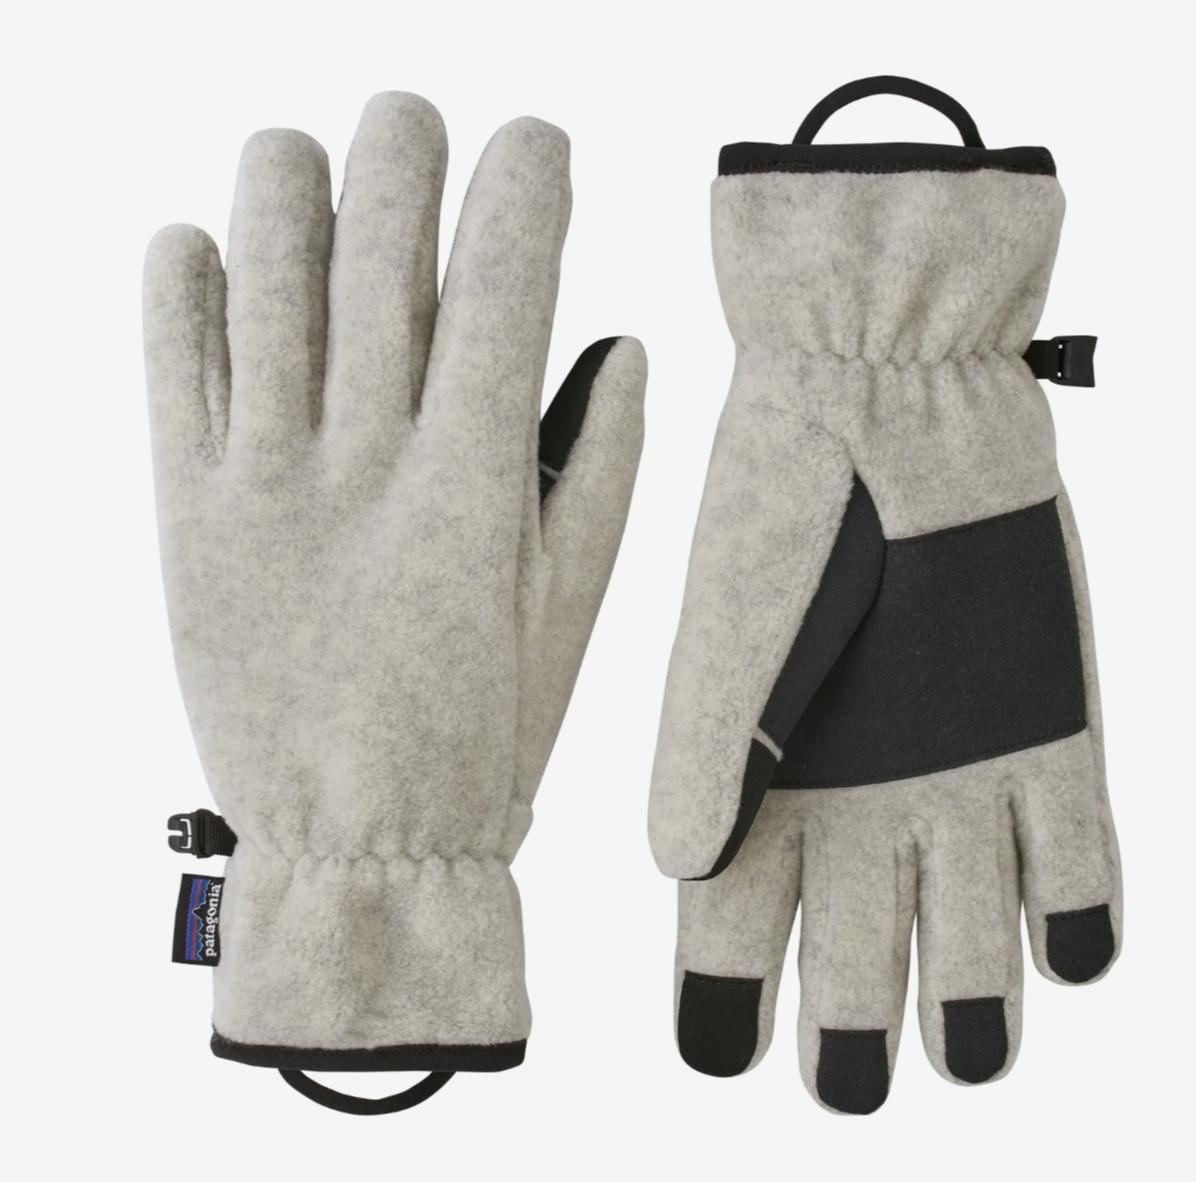 Patagonia Synchilla Gloves